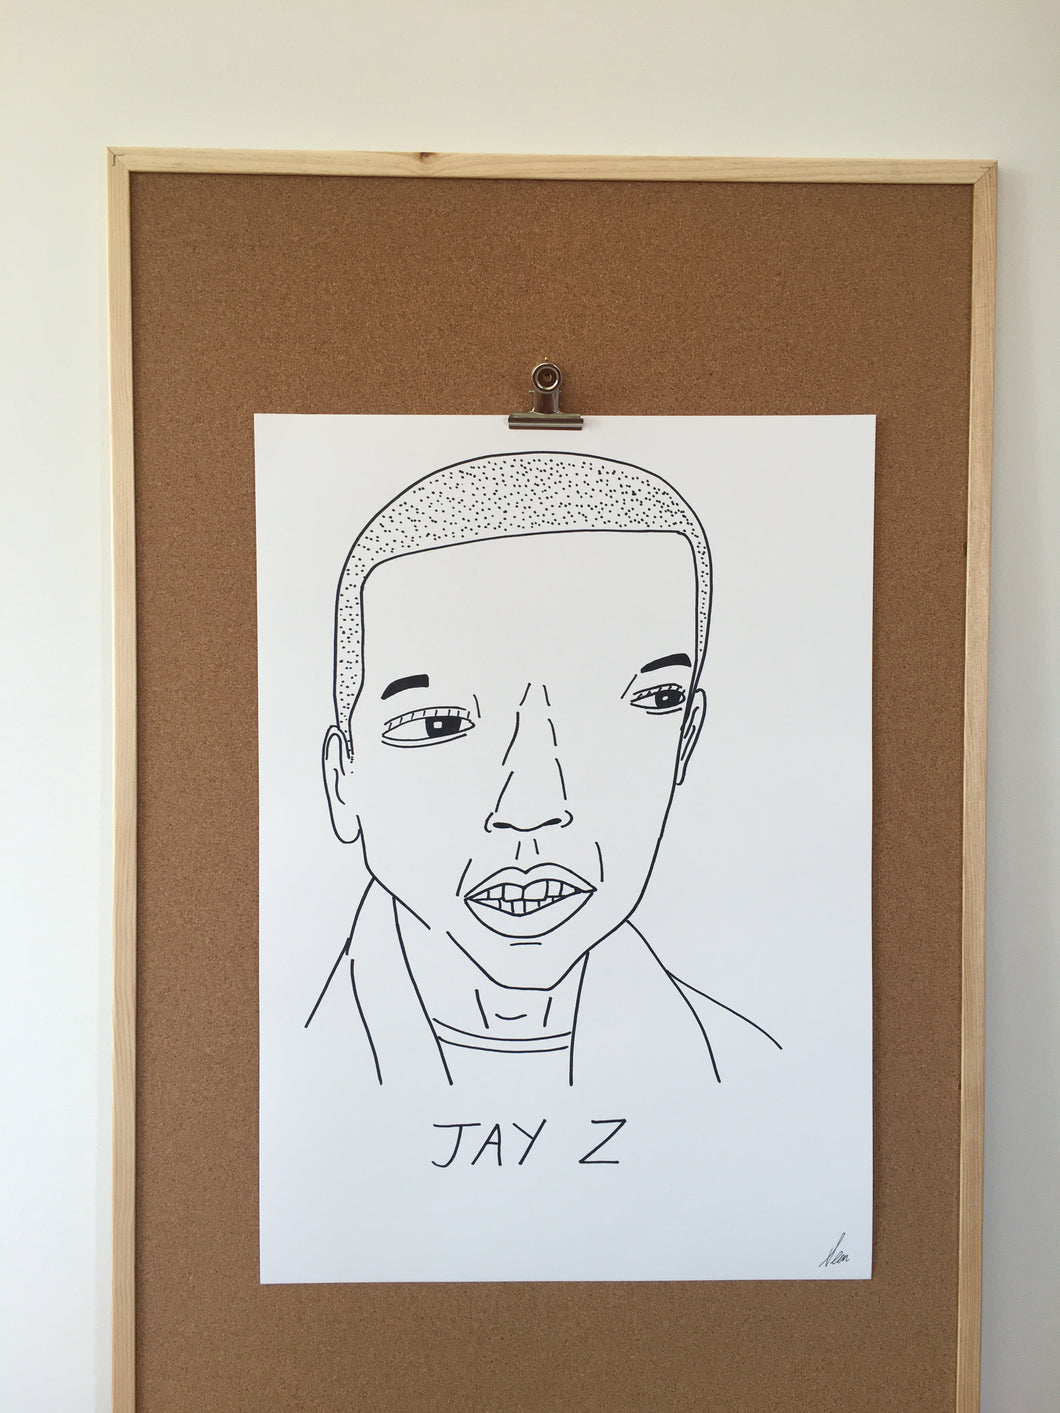 Badly Drawn Jay Z - Original Drawing - A2.